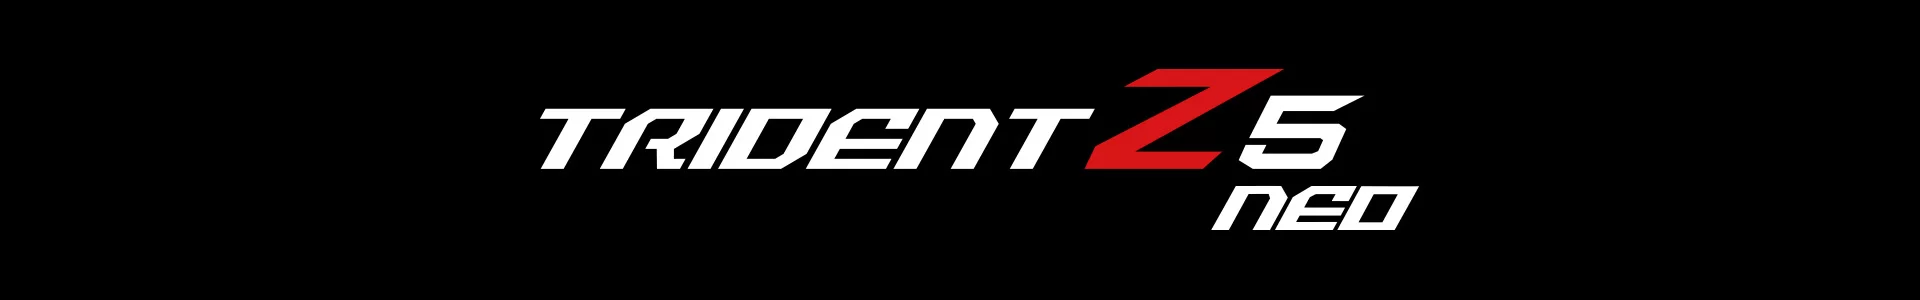 Trident Z5 Neo logo